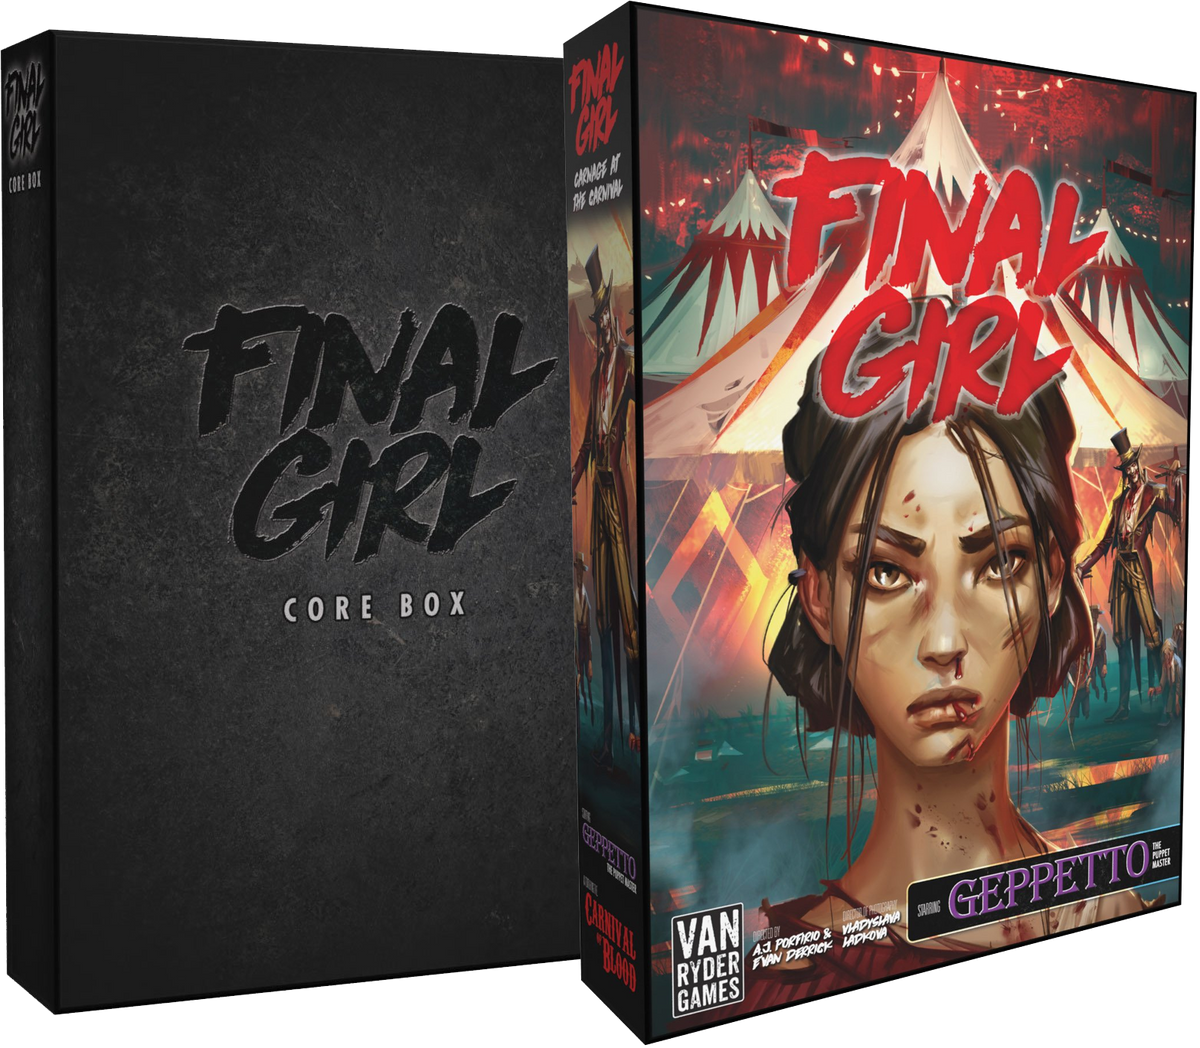 Final Girl: Core Box + Feature Film